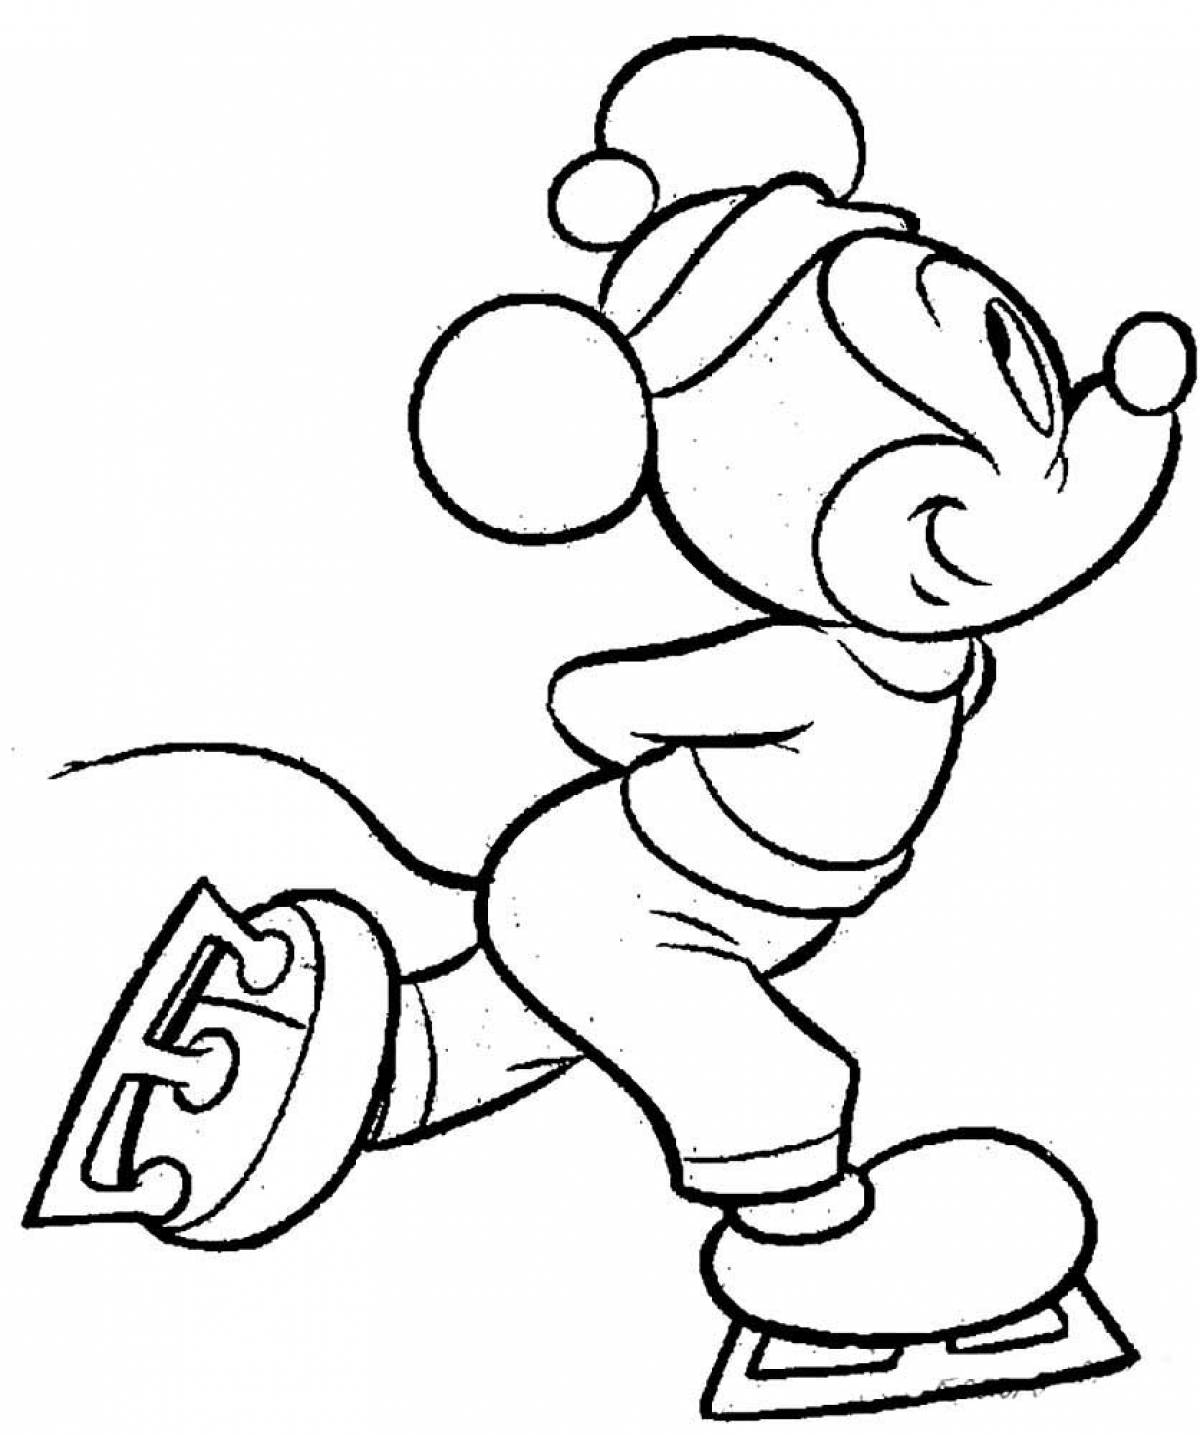 Mickey on skates